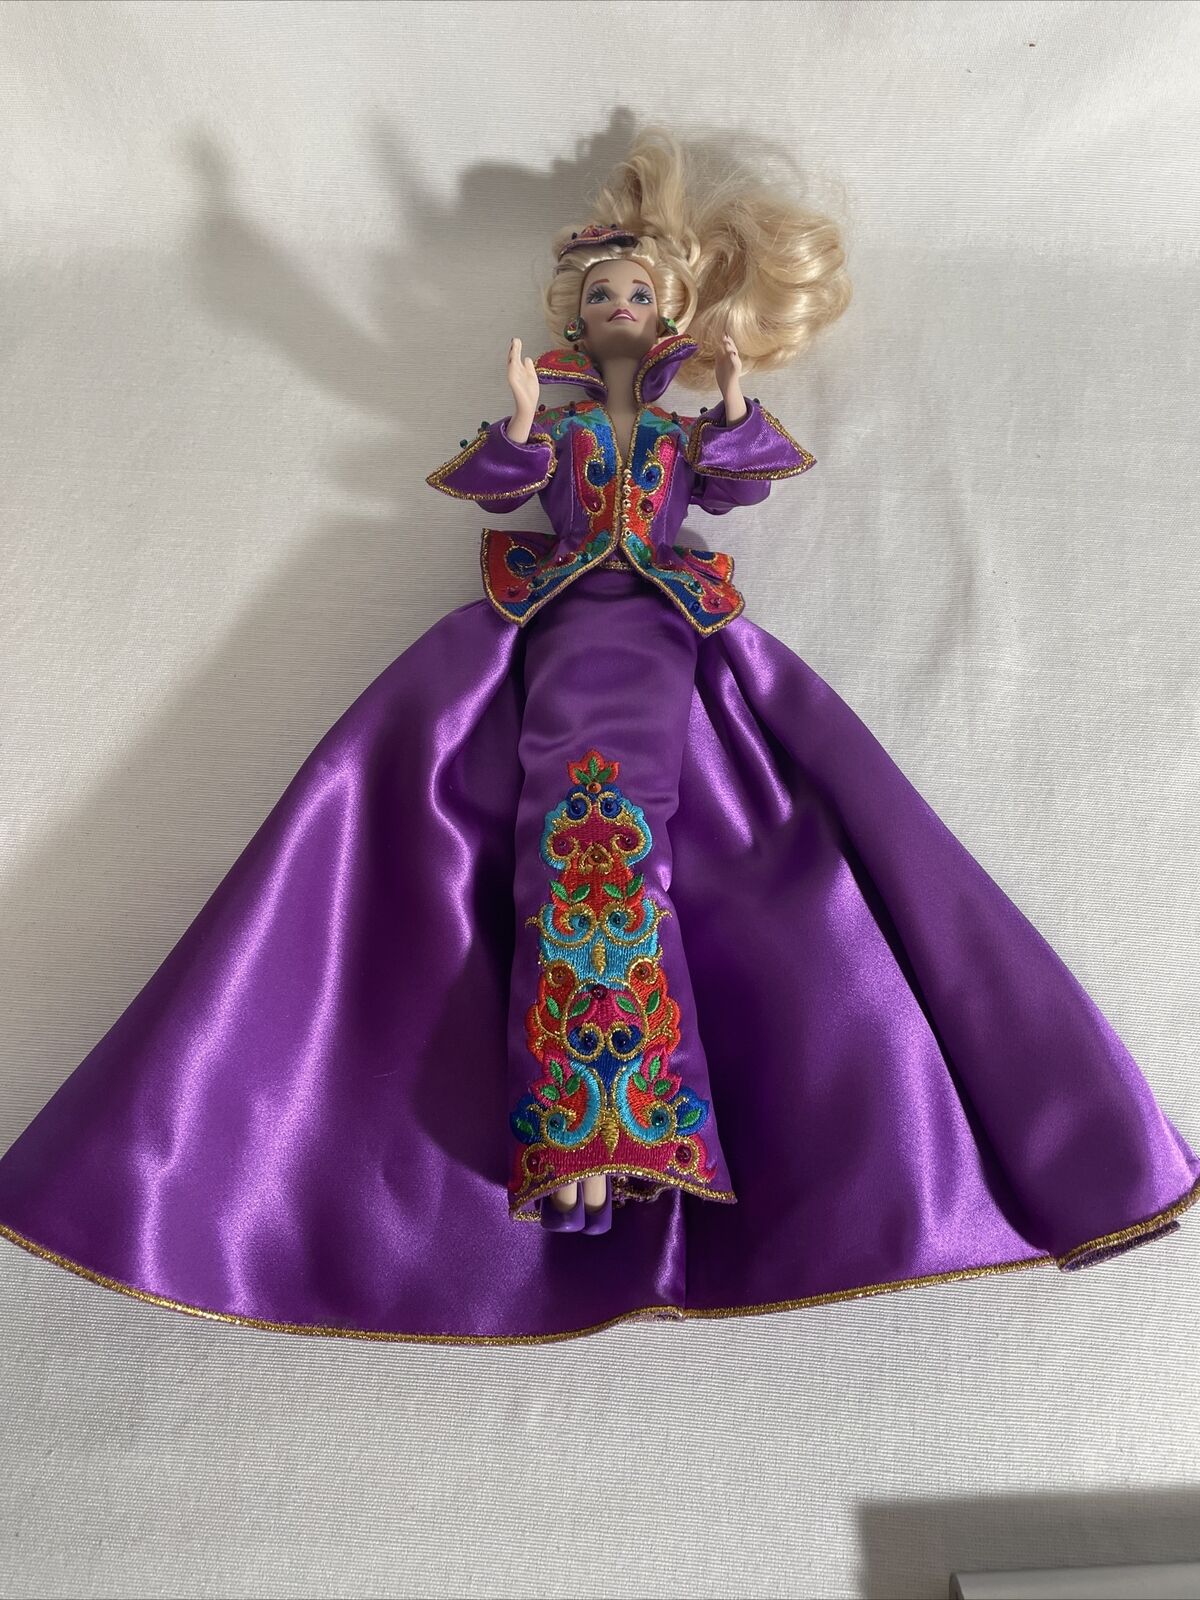 Presidential Porcelain Barbie - Royal Splendor - Limited Edition - #10950